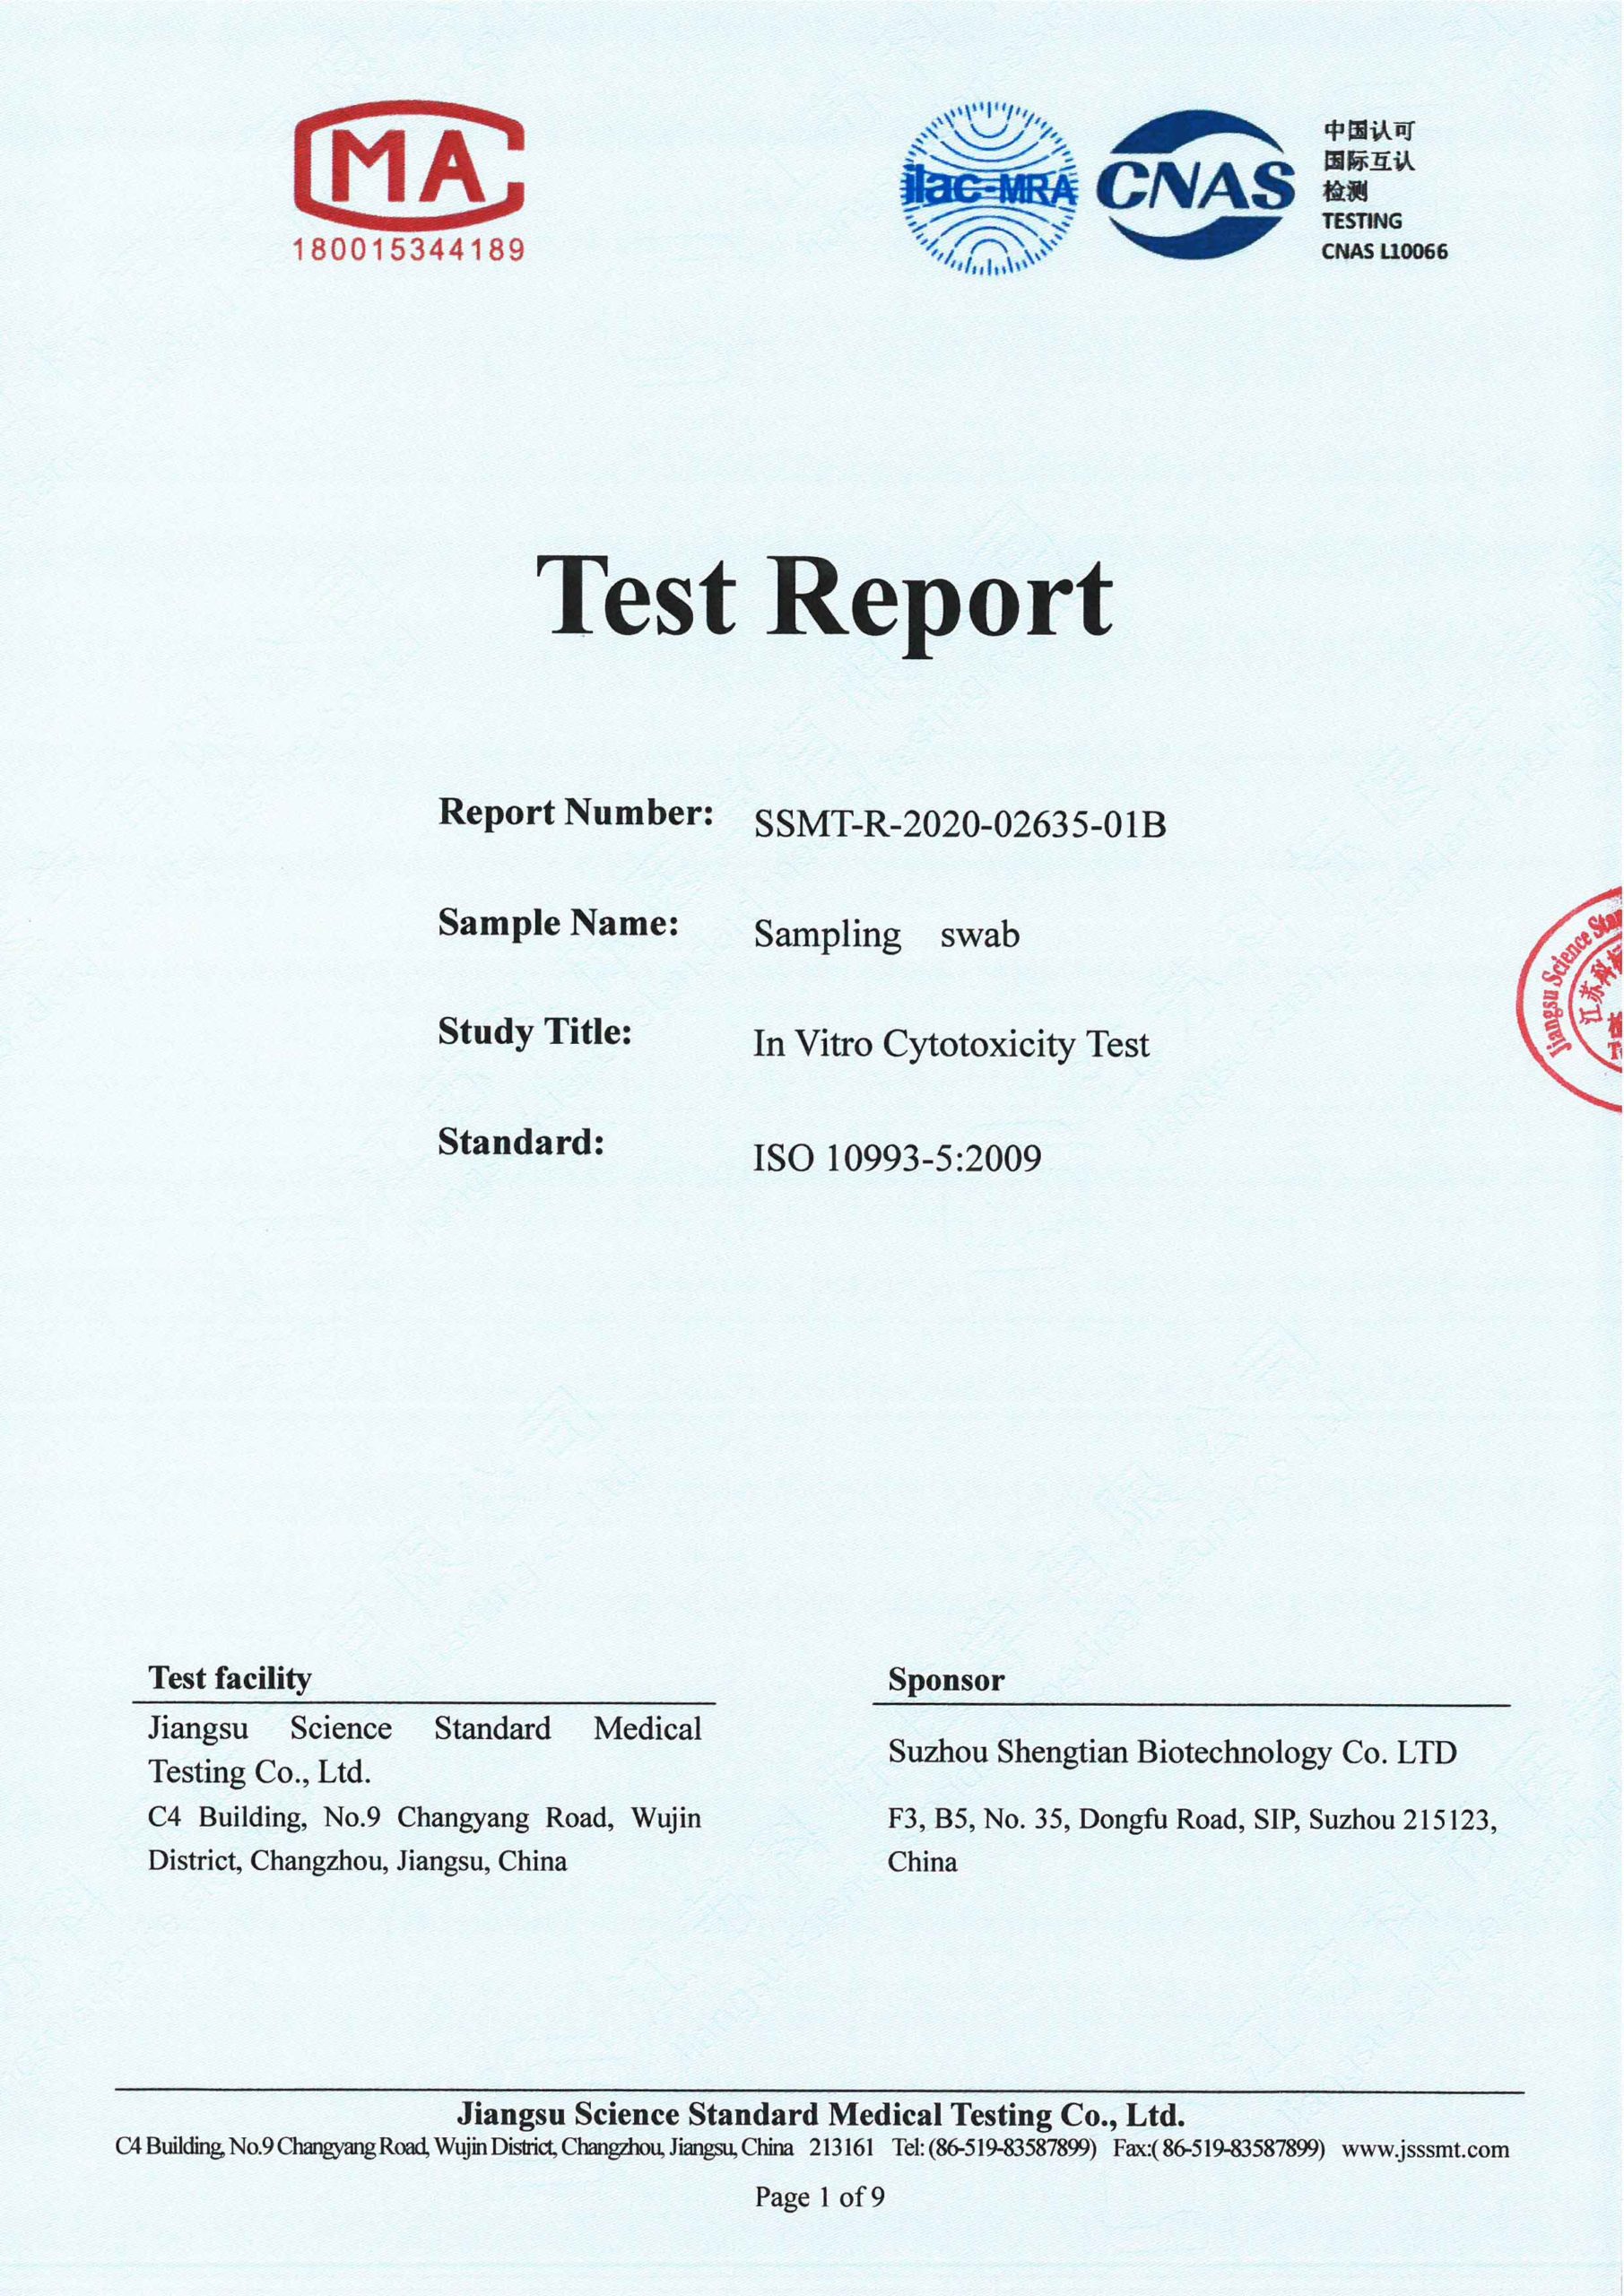 In Vitro Cytotoxicity Test Certificate